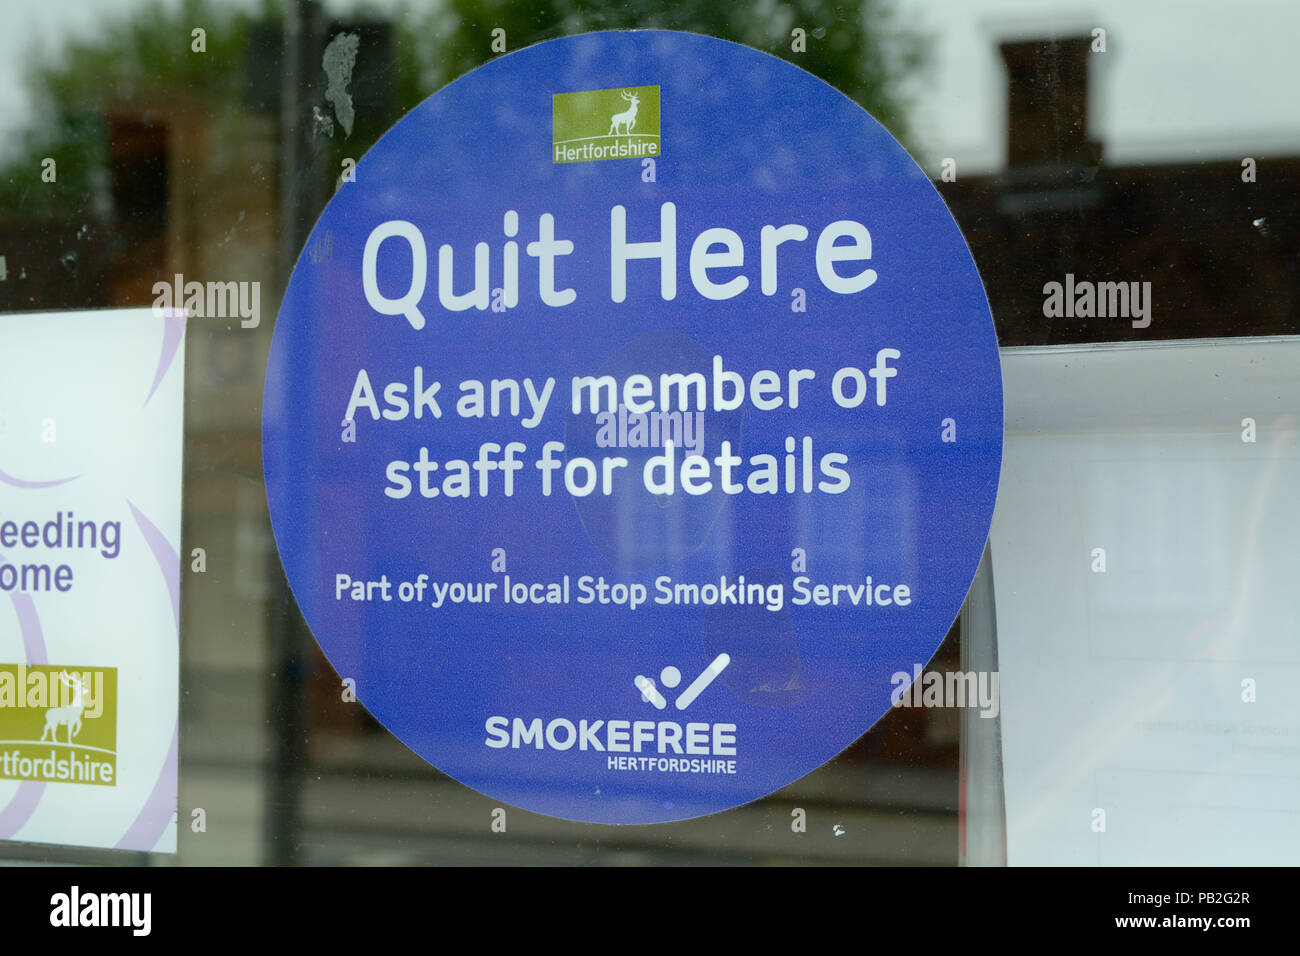 Hertfordshire Council Smokefree - quit smoking advert Stock Photo